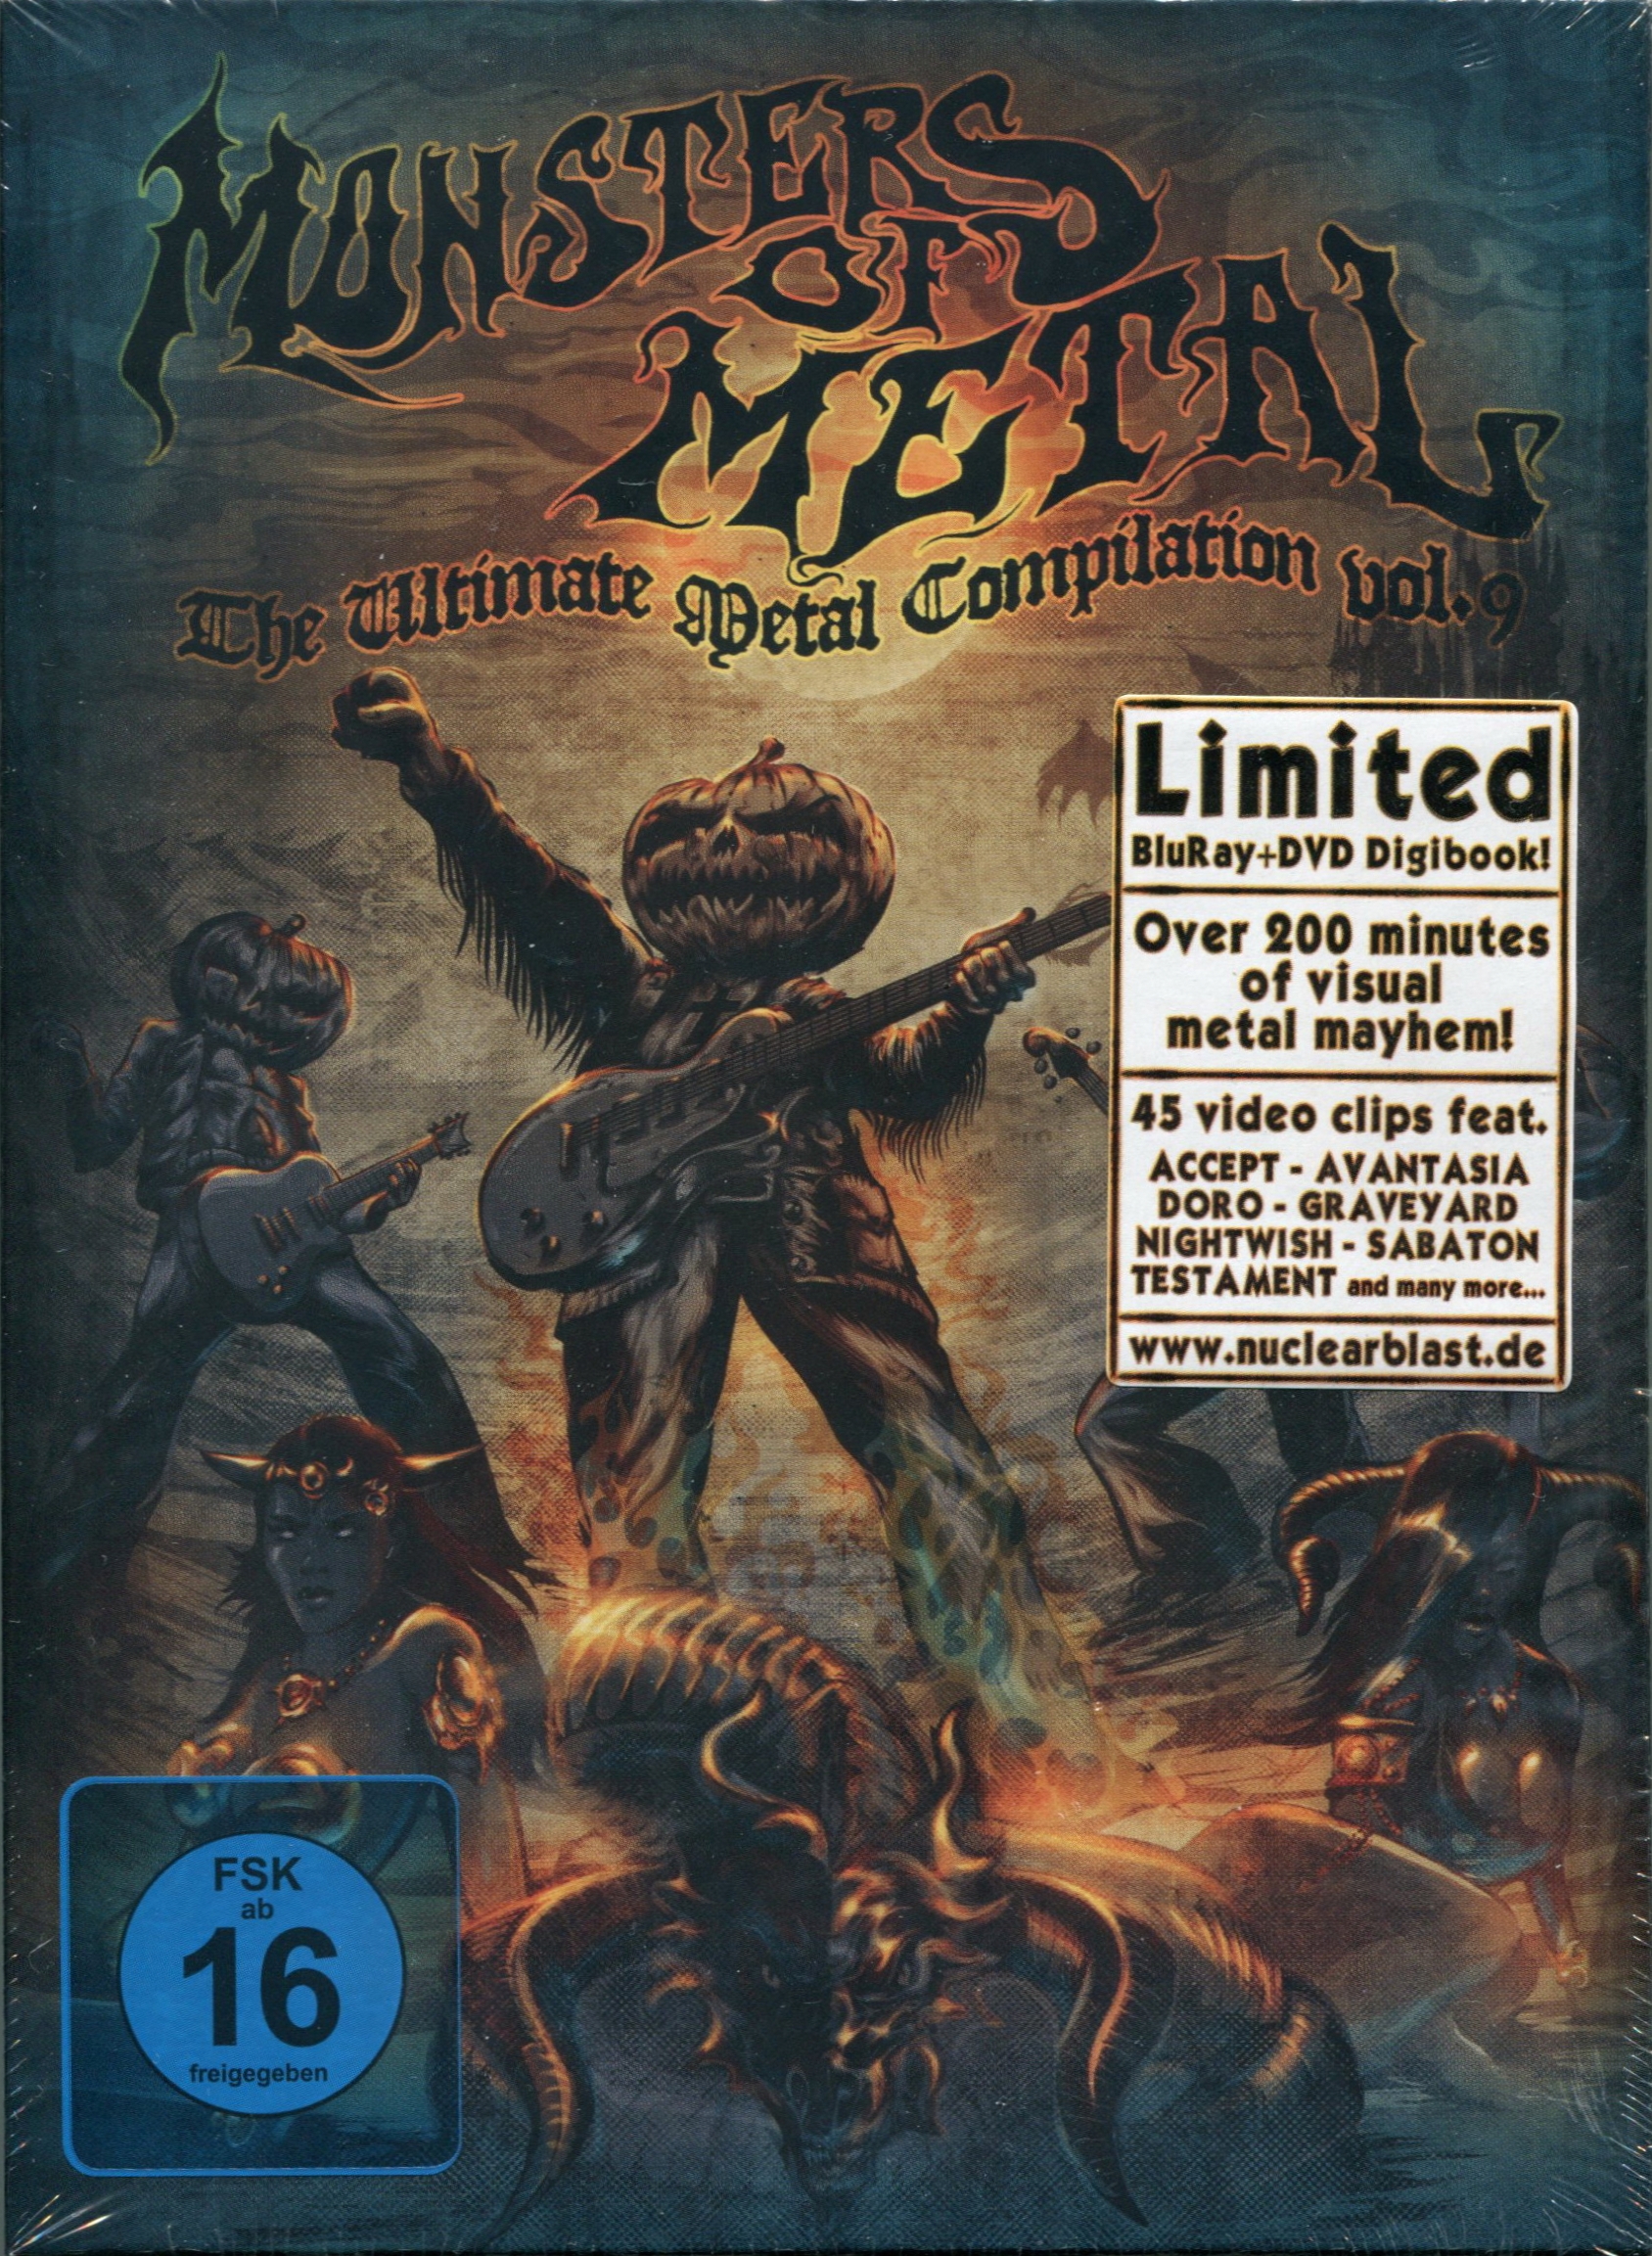 Monsters of metal. Monsters of Metal Vol 6 обложка. DVD сборники Monsters of Metal. DVD Monsters of Metal Vol. Monsters of Metal Vol. 9.